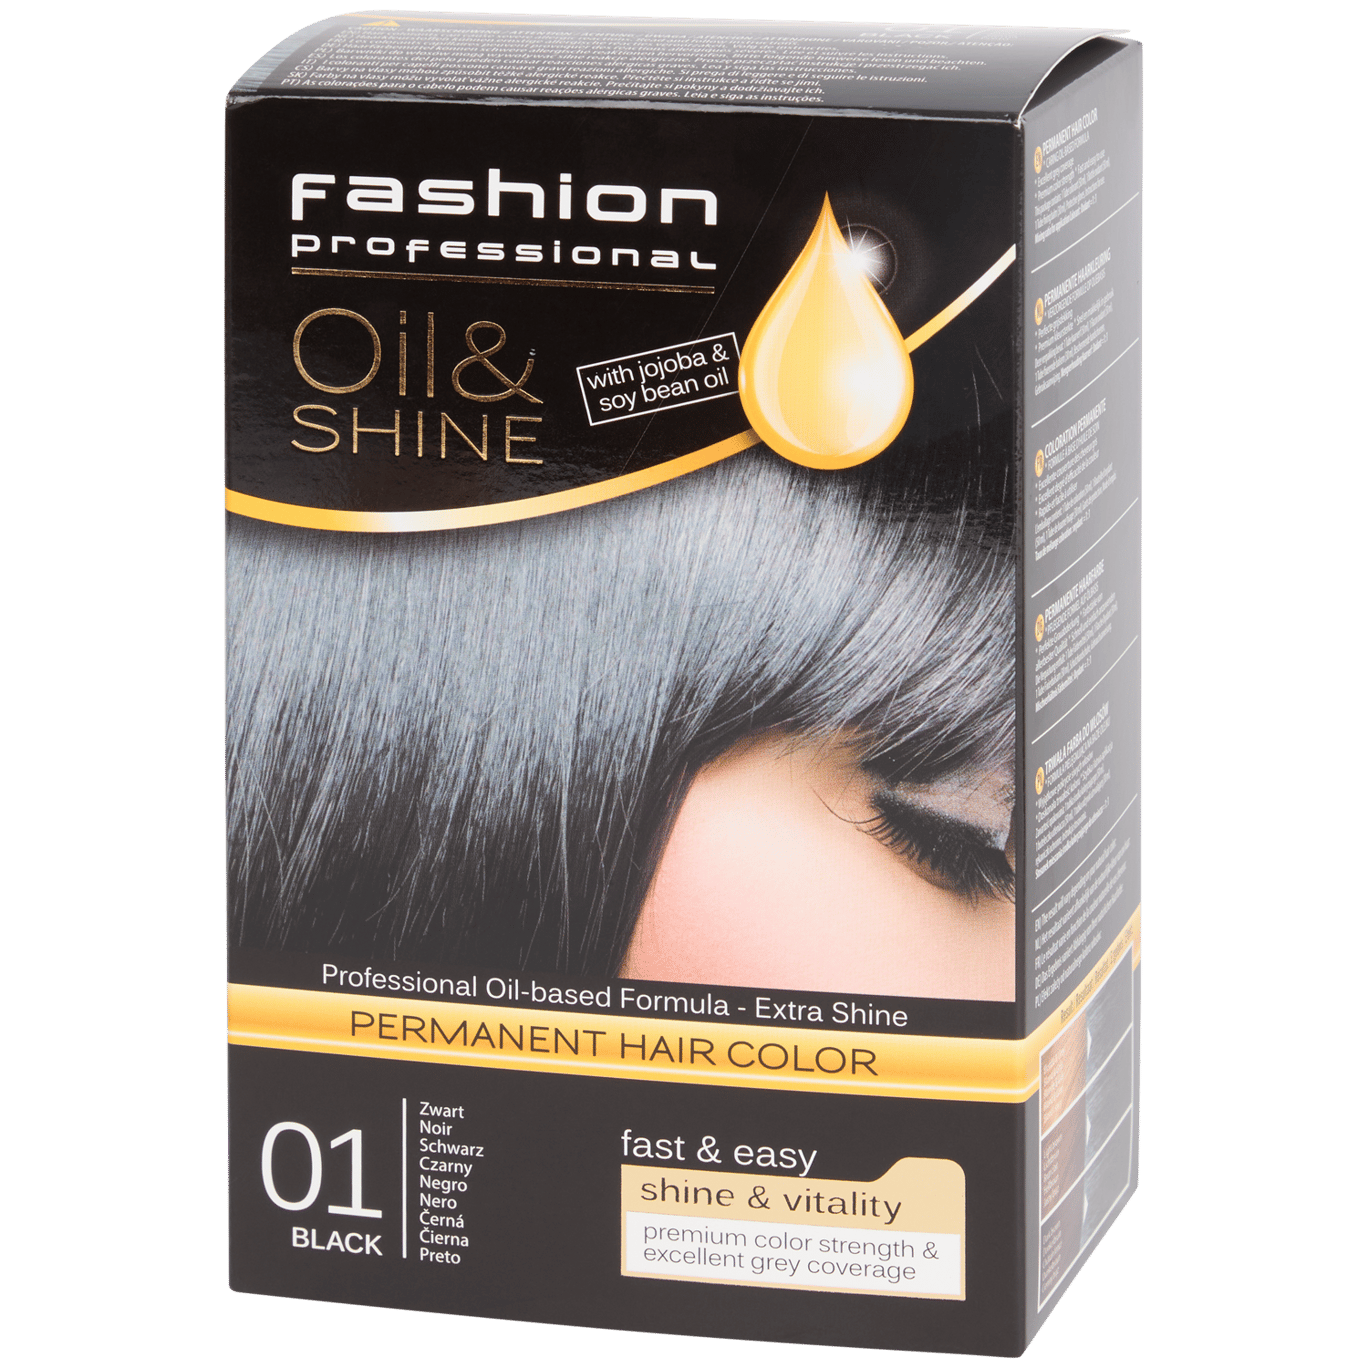 Fashion Professional Haarcoloration Oil & Shine